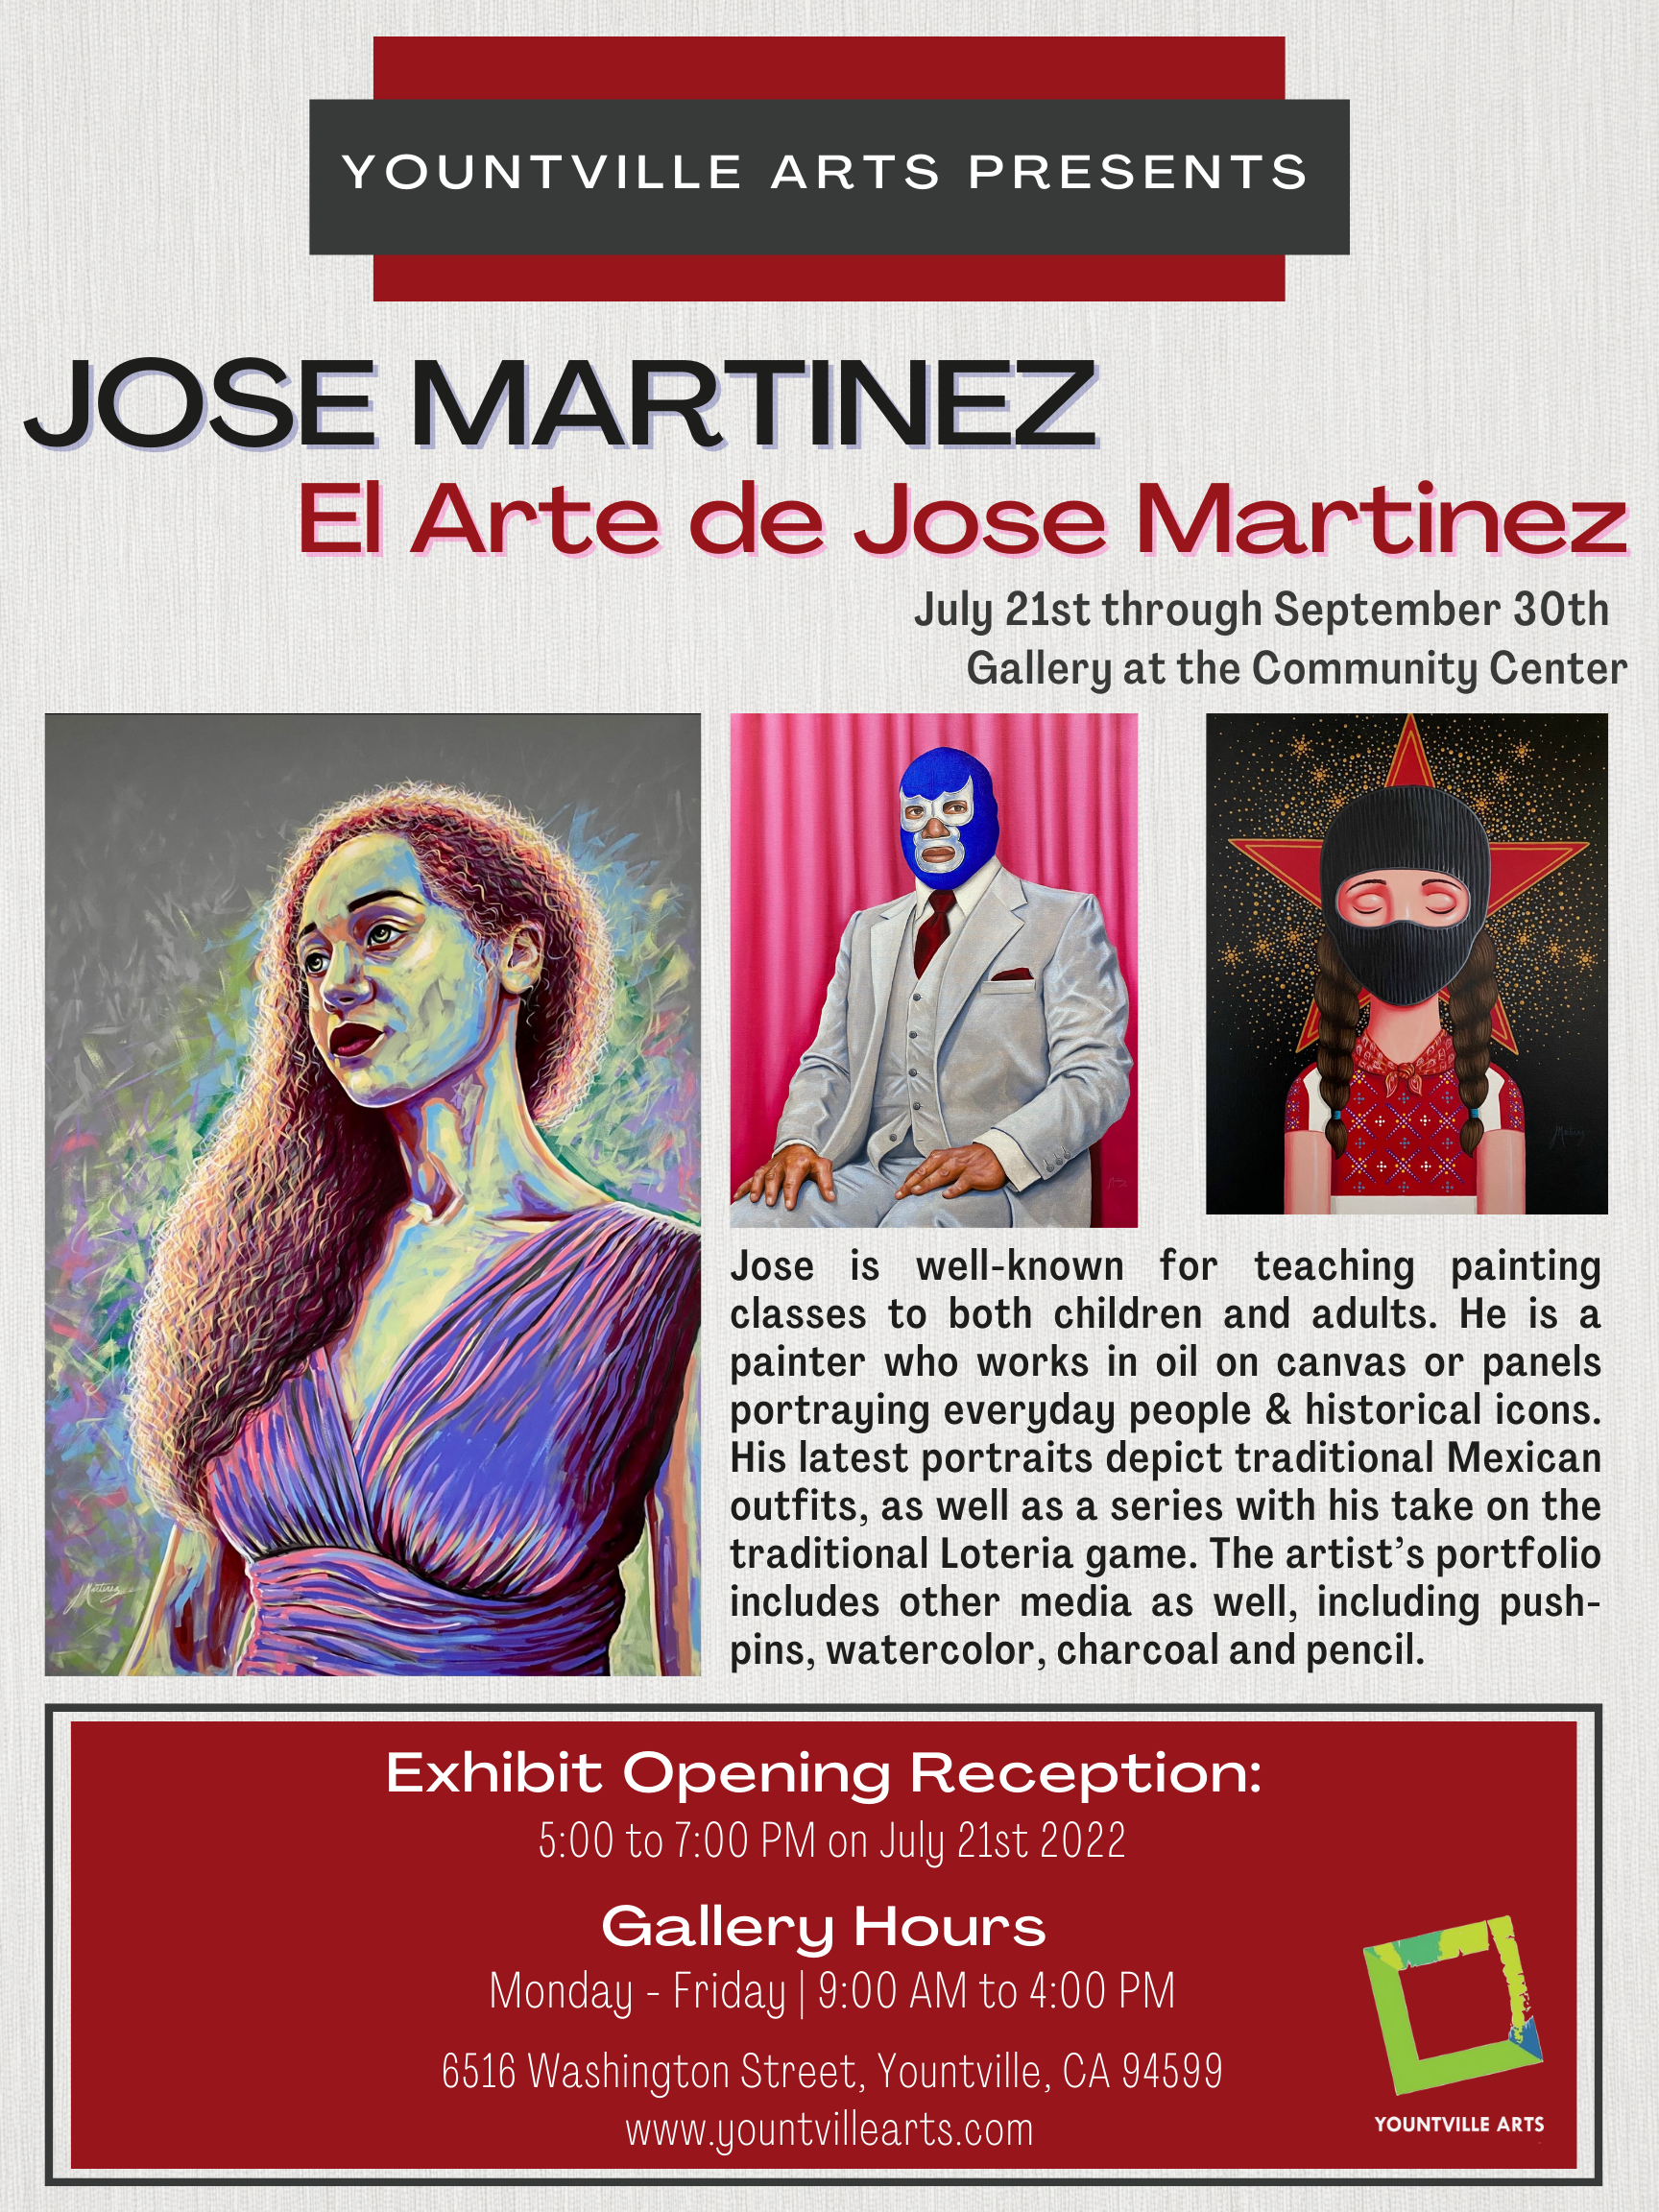 Yountville Arts Presents  “JOSE MARTINEZ El Arte de Jose Martinez”